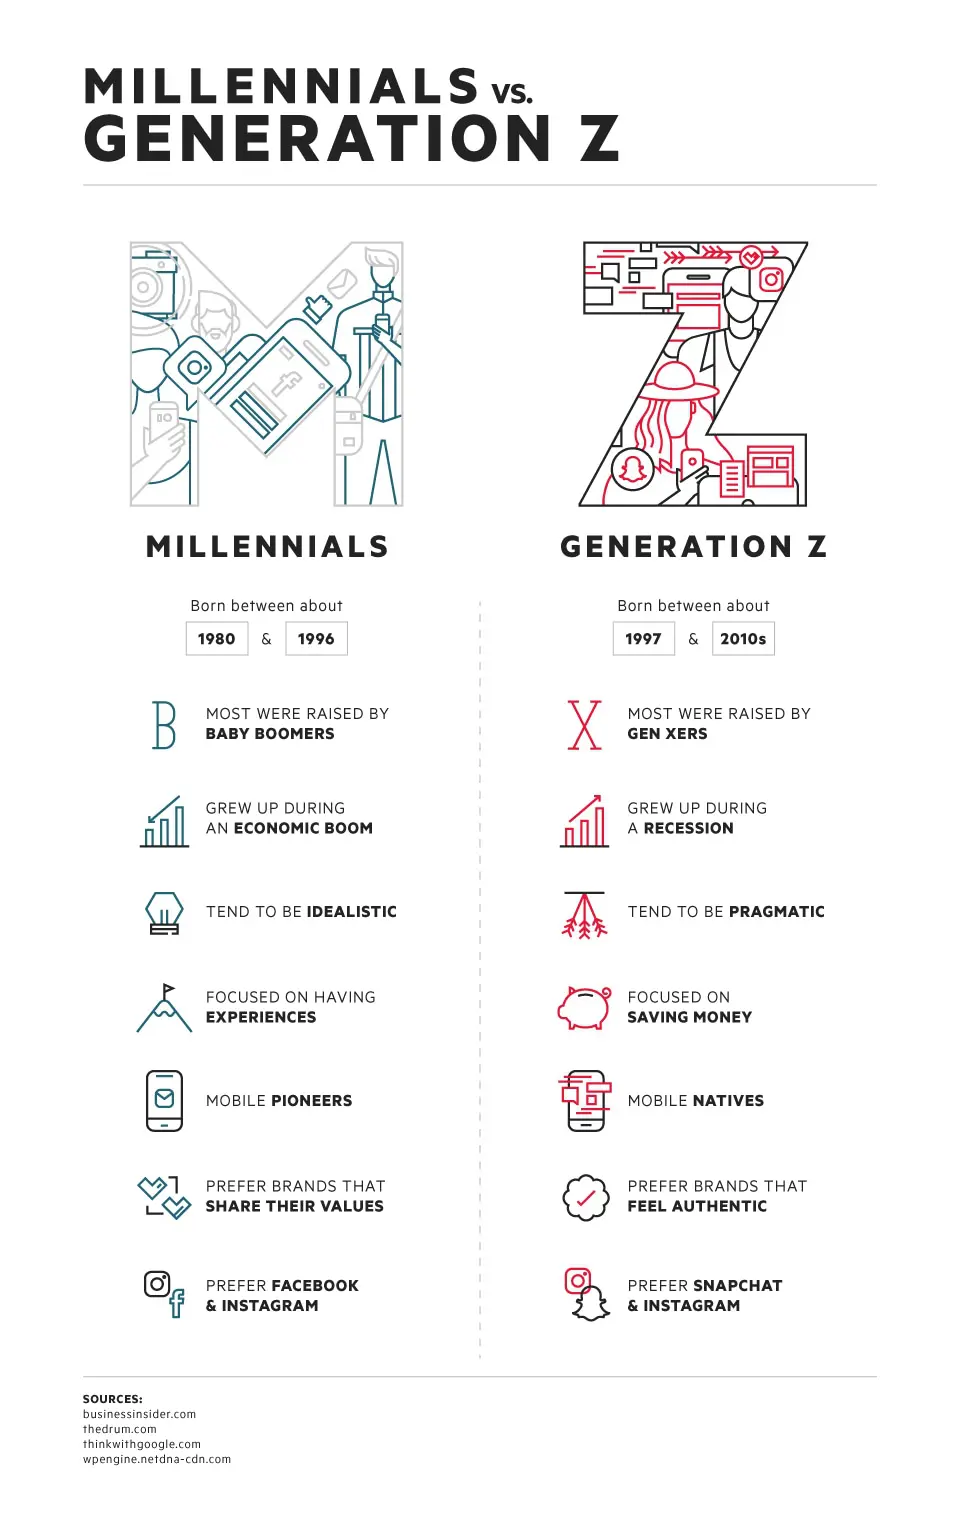 Millennials vs. Generation Z